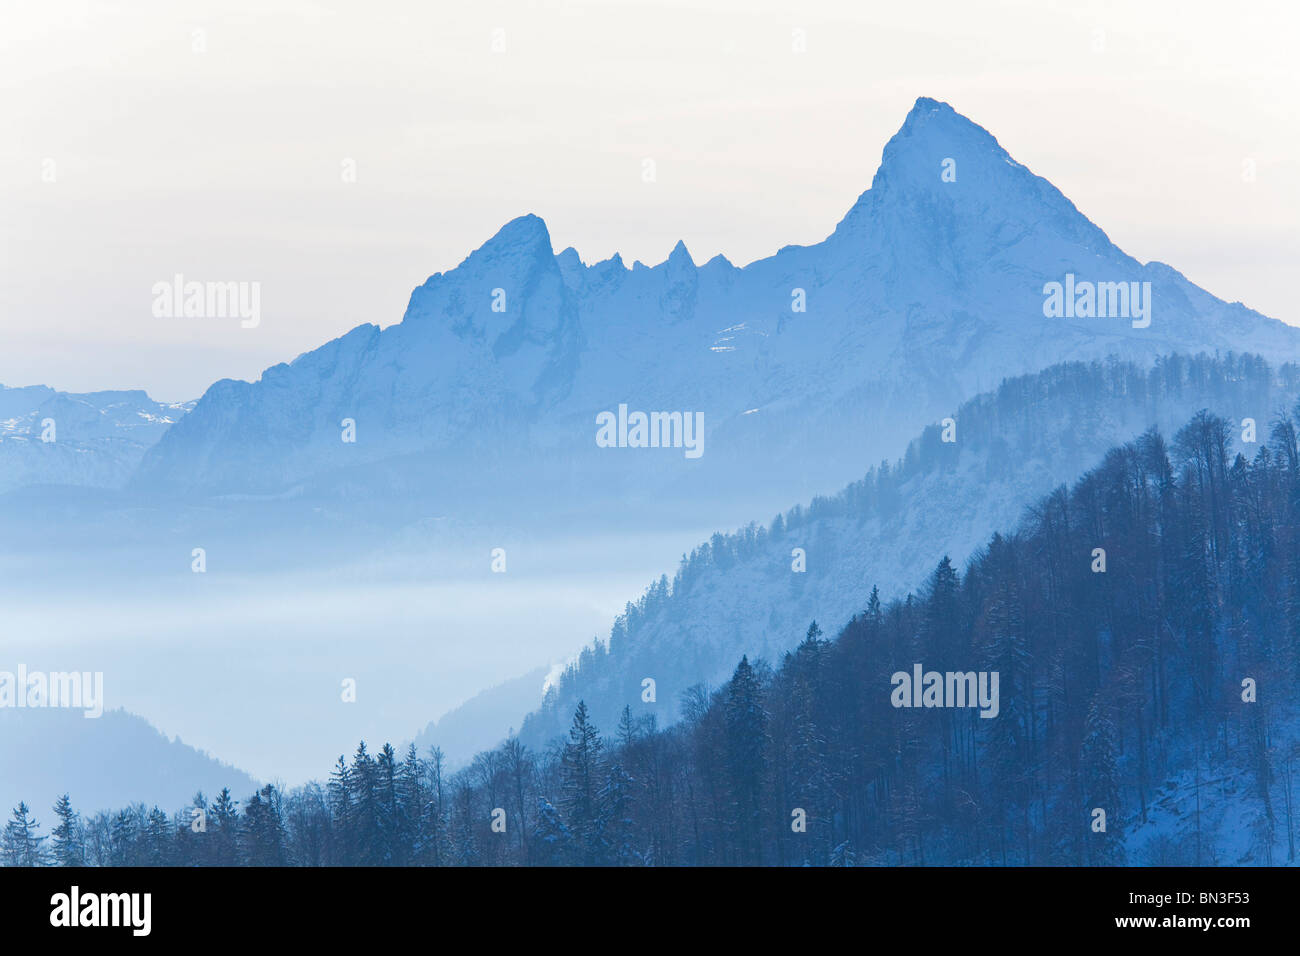 View of Watzmann, Berchtesgaden Alps, Berchtesgadener Land, Germany, elevated view Stock Photo